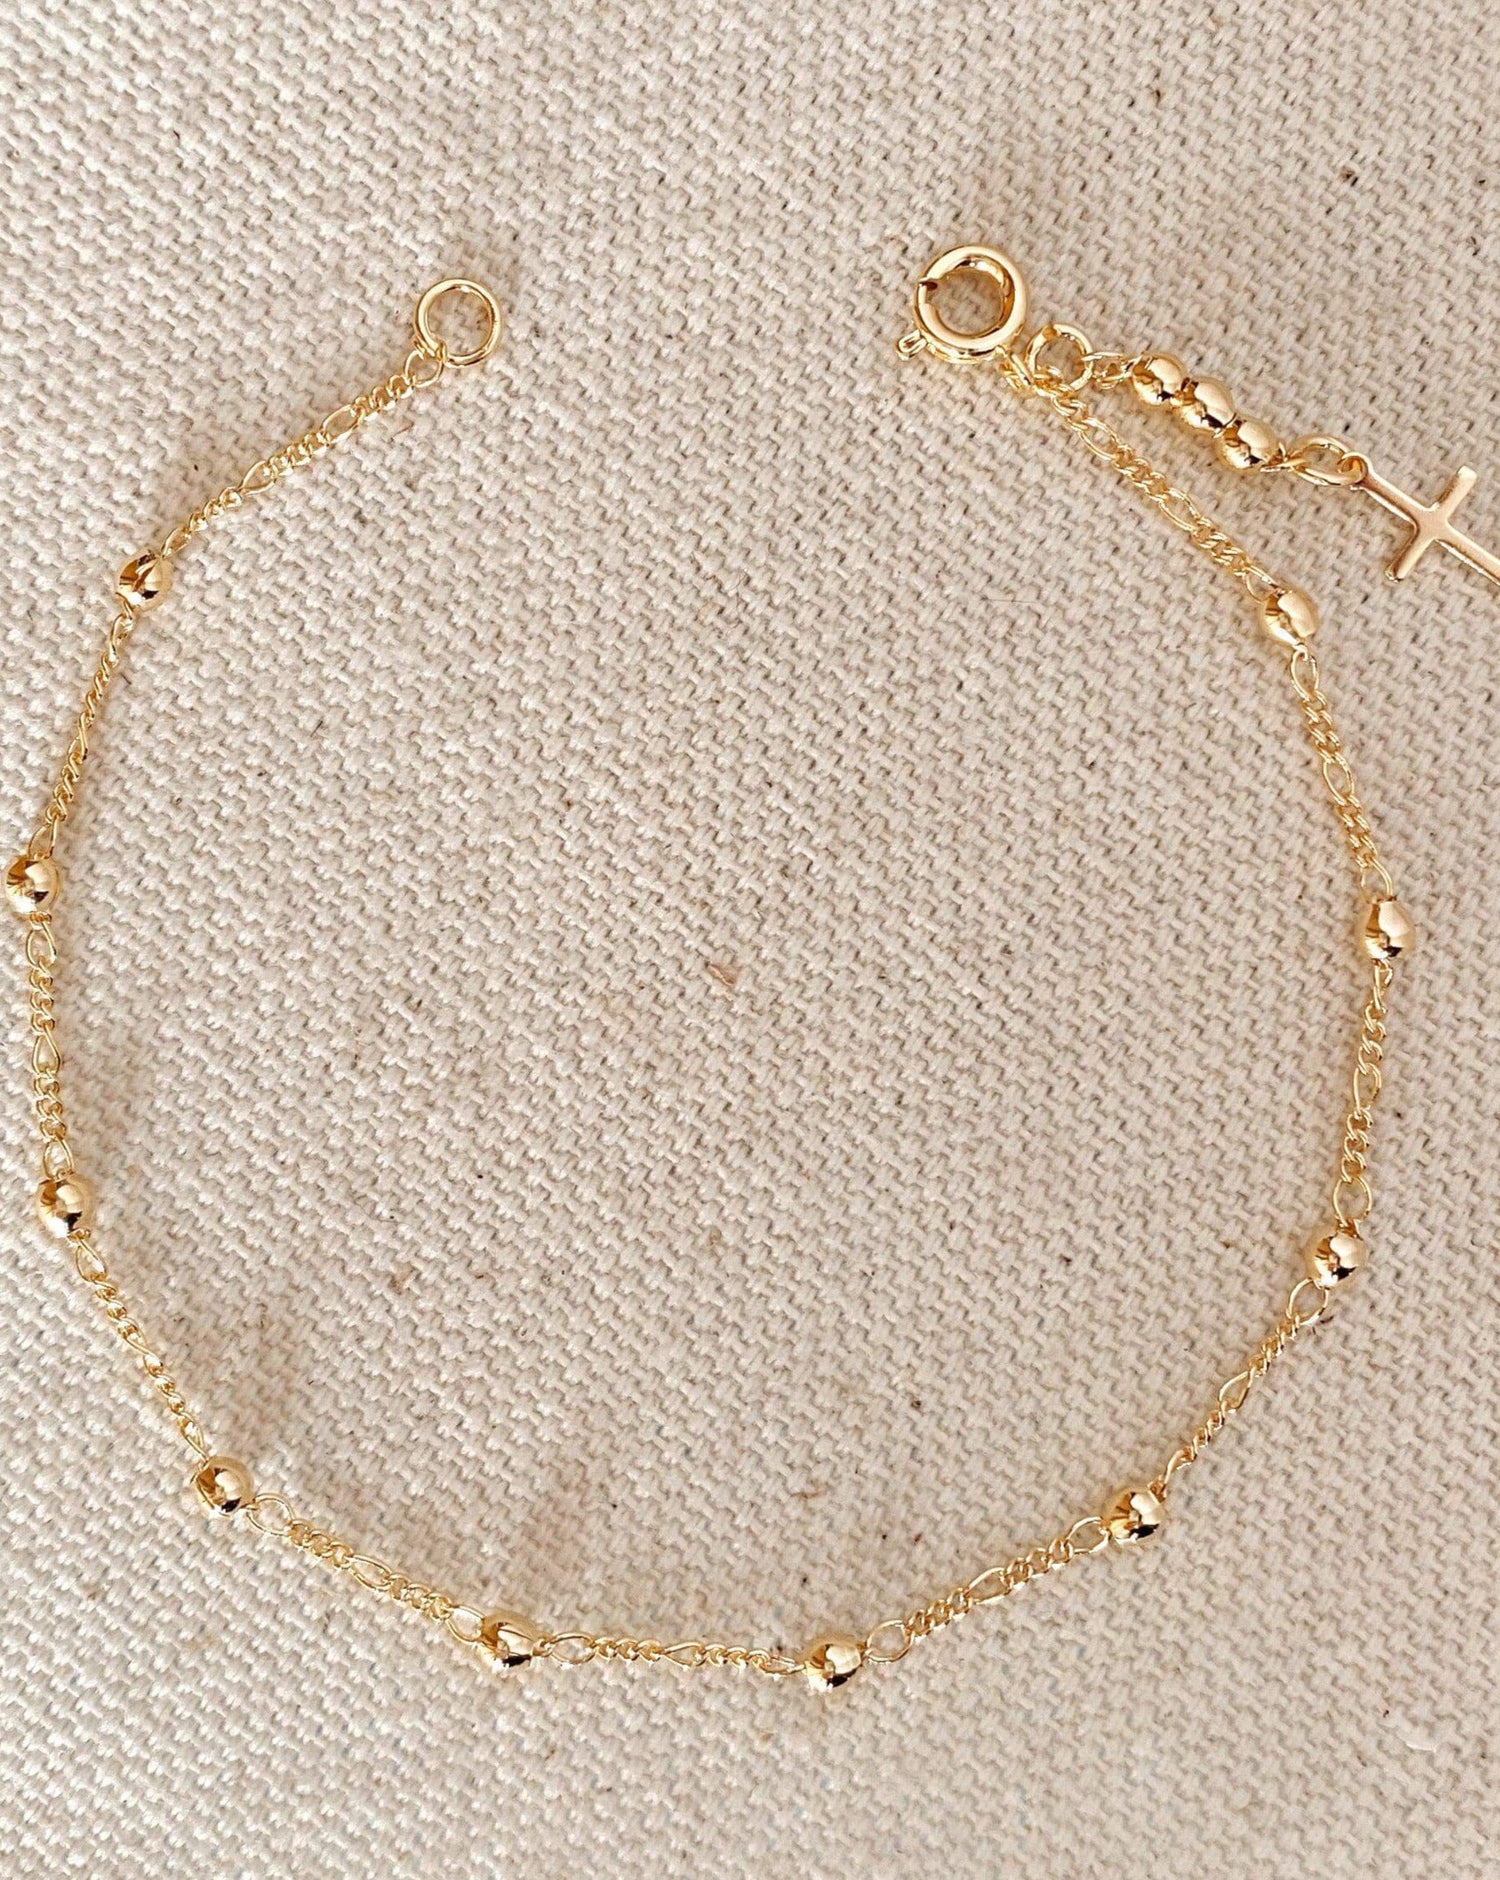 18k Gold Filled Beaded Bracelet with Cross Charm